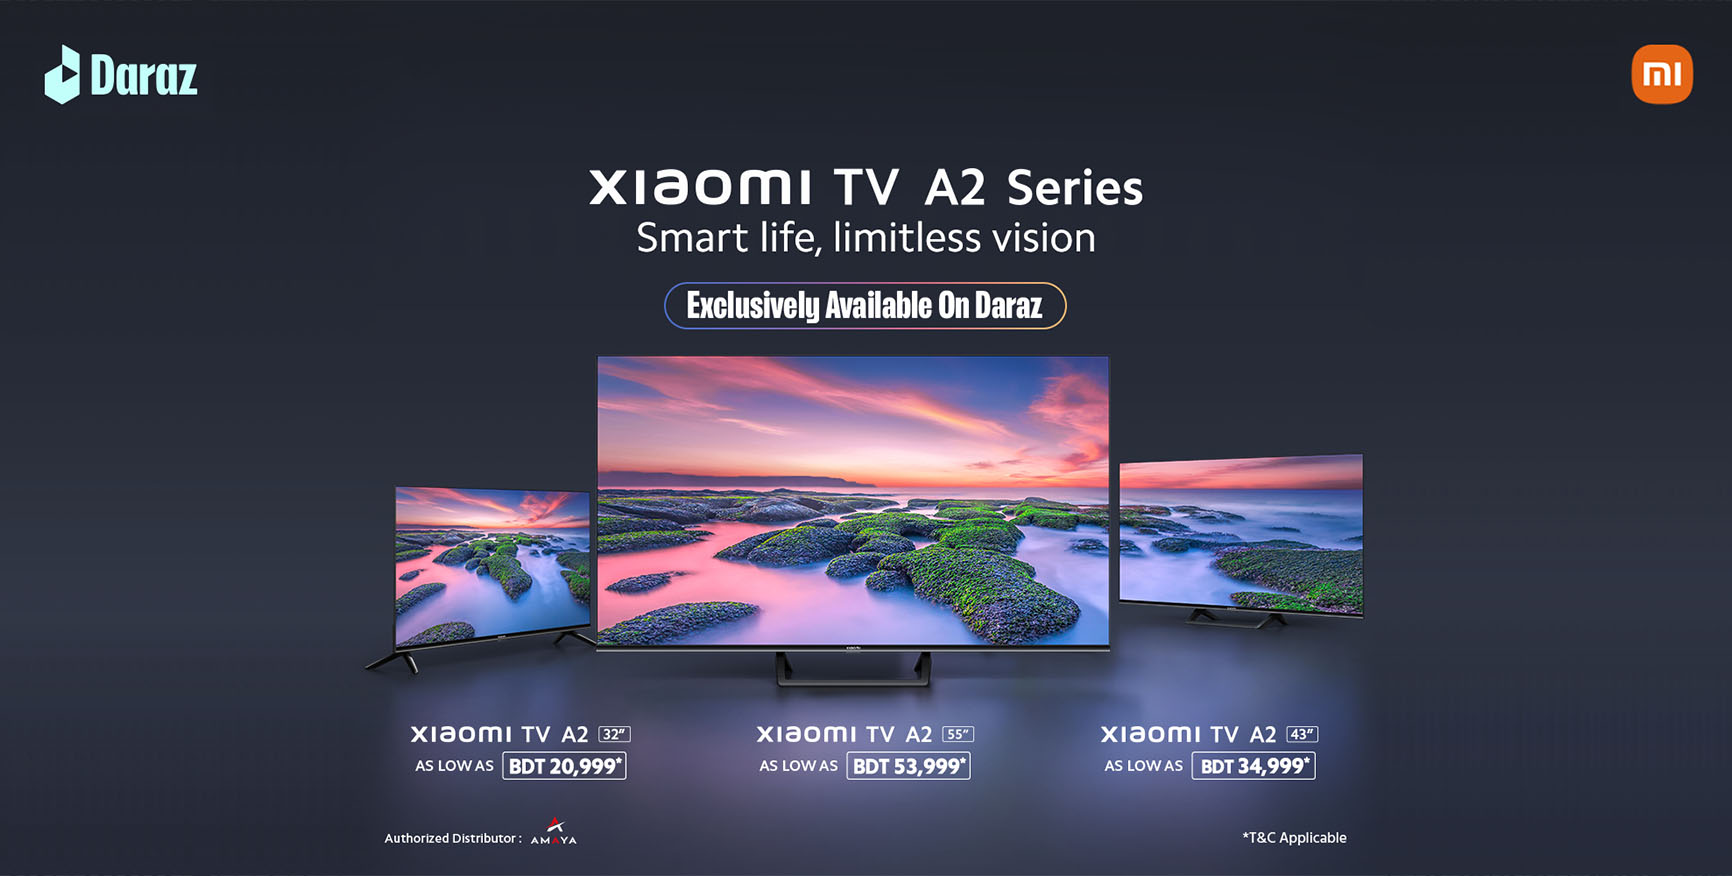 Xiaomi Smart TV A2 32